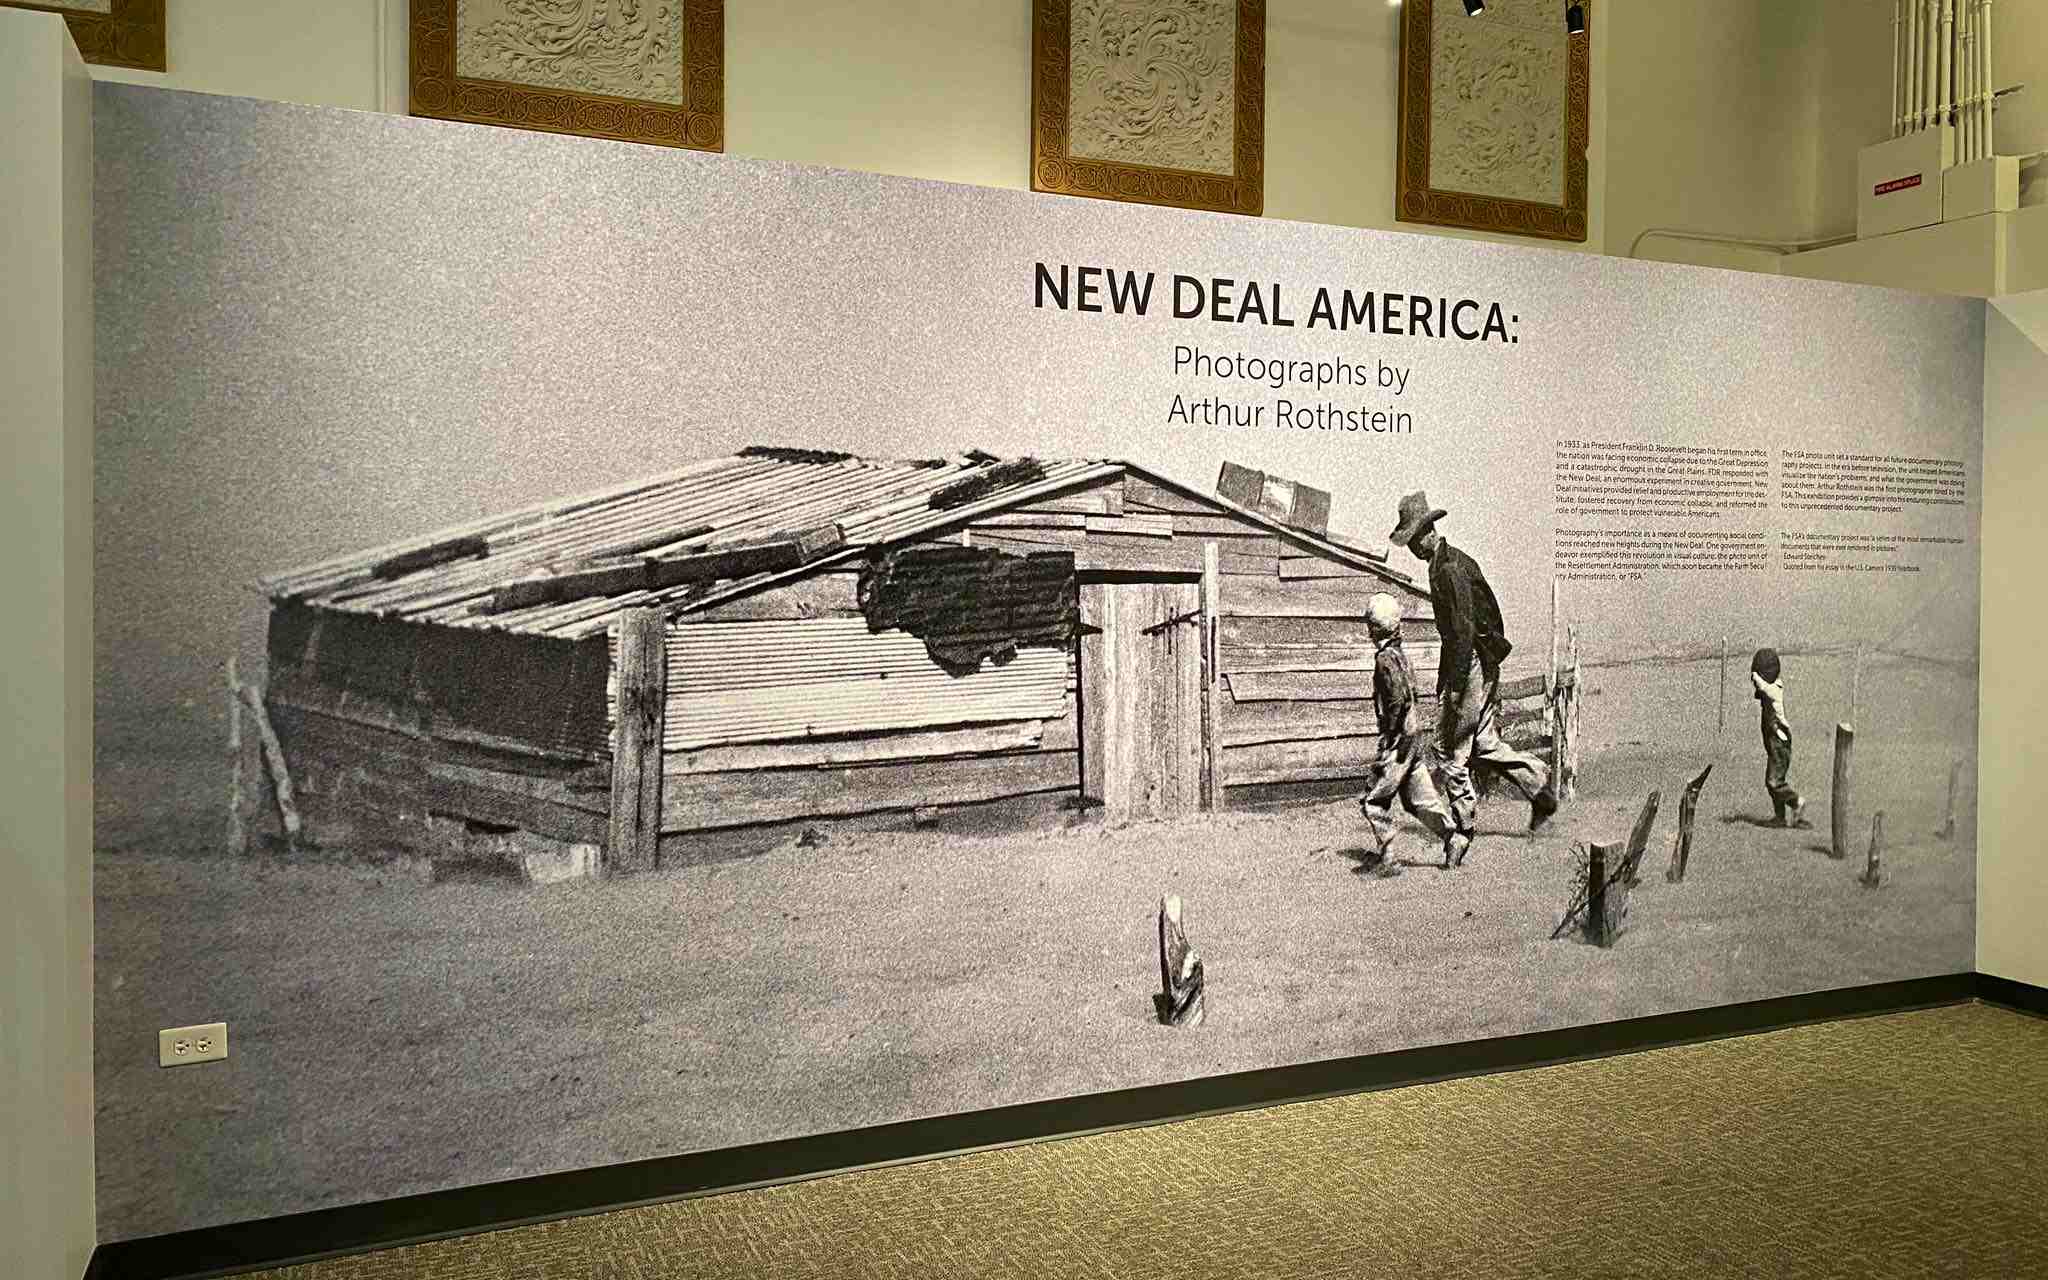 New Deal America: Photographs by Arthur Rothstein